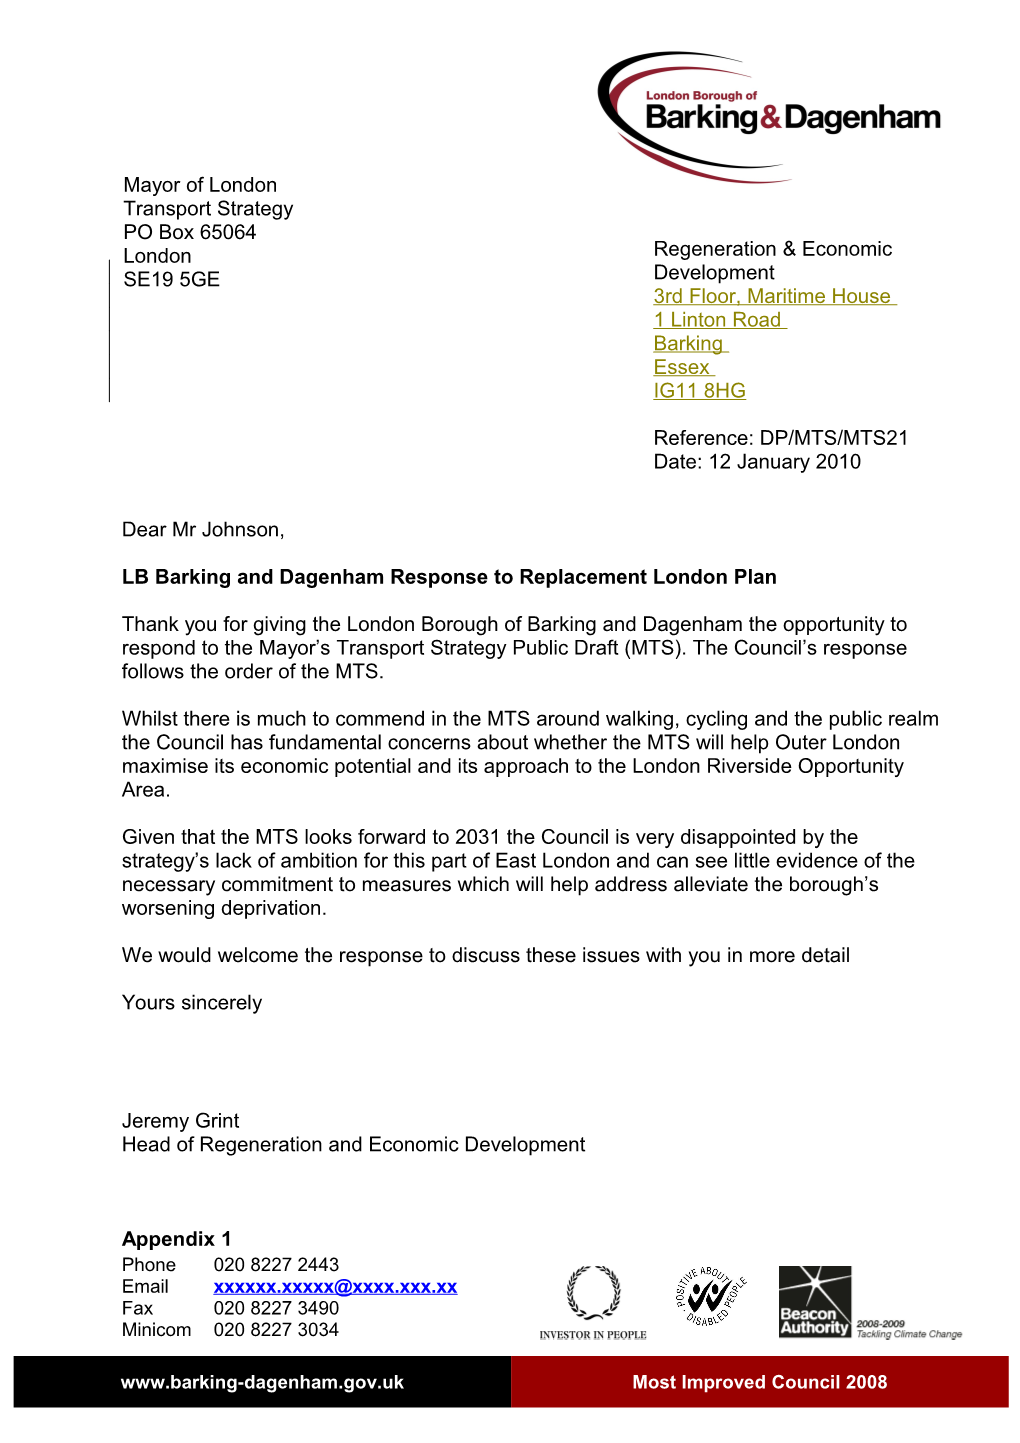 LB Barking and Dagenham Response to Replacement London Plan